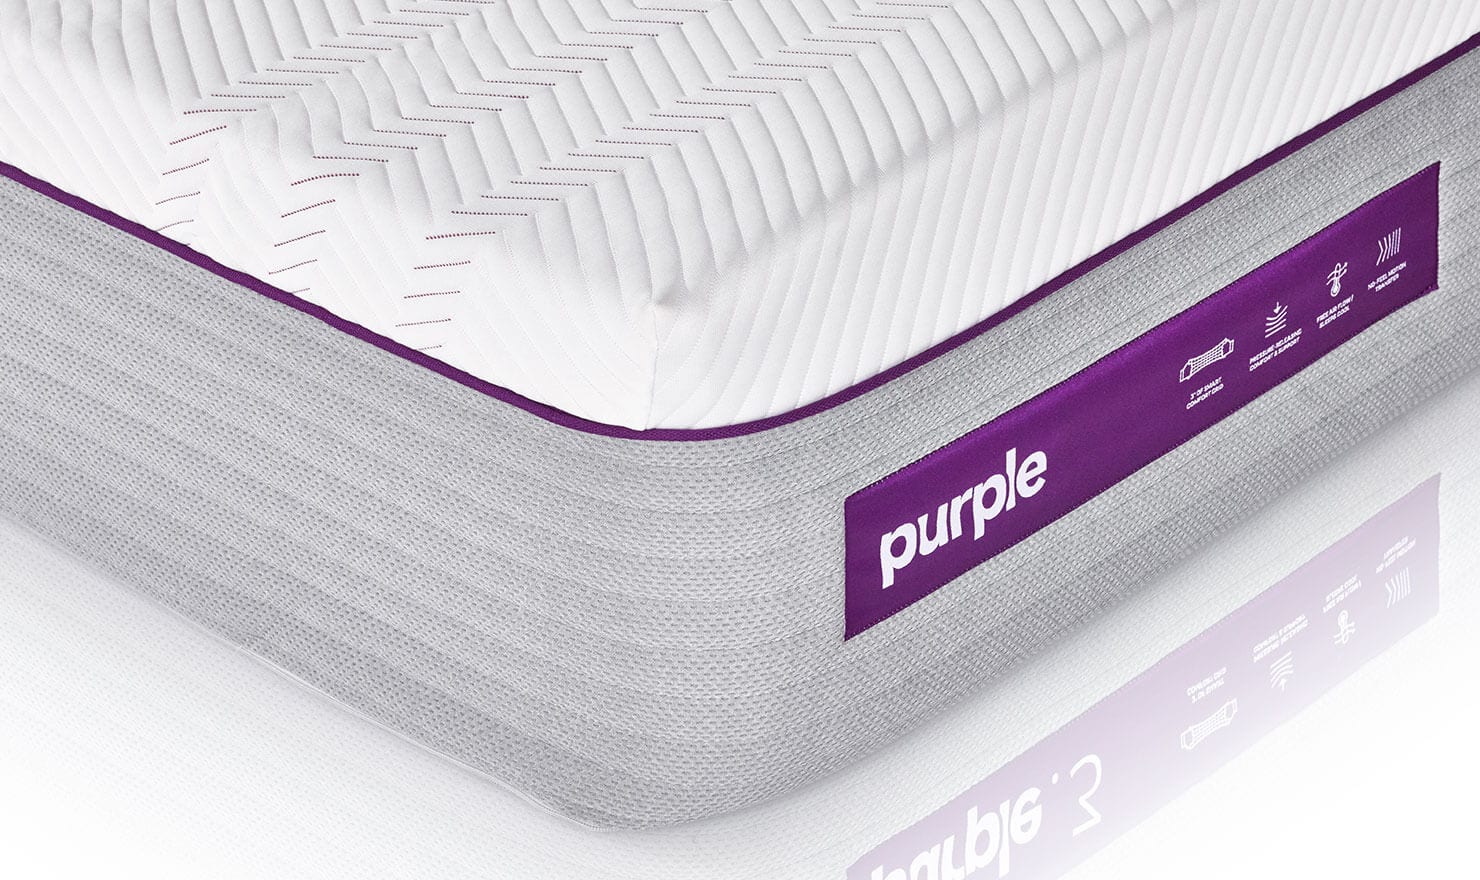 pruple 2 4 6 mattress review